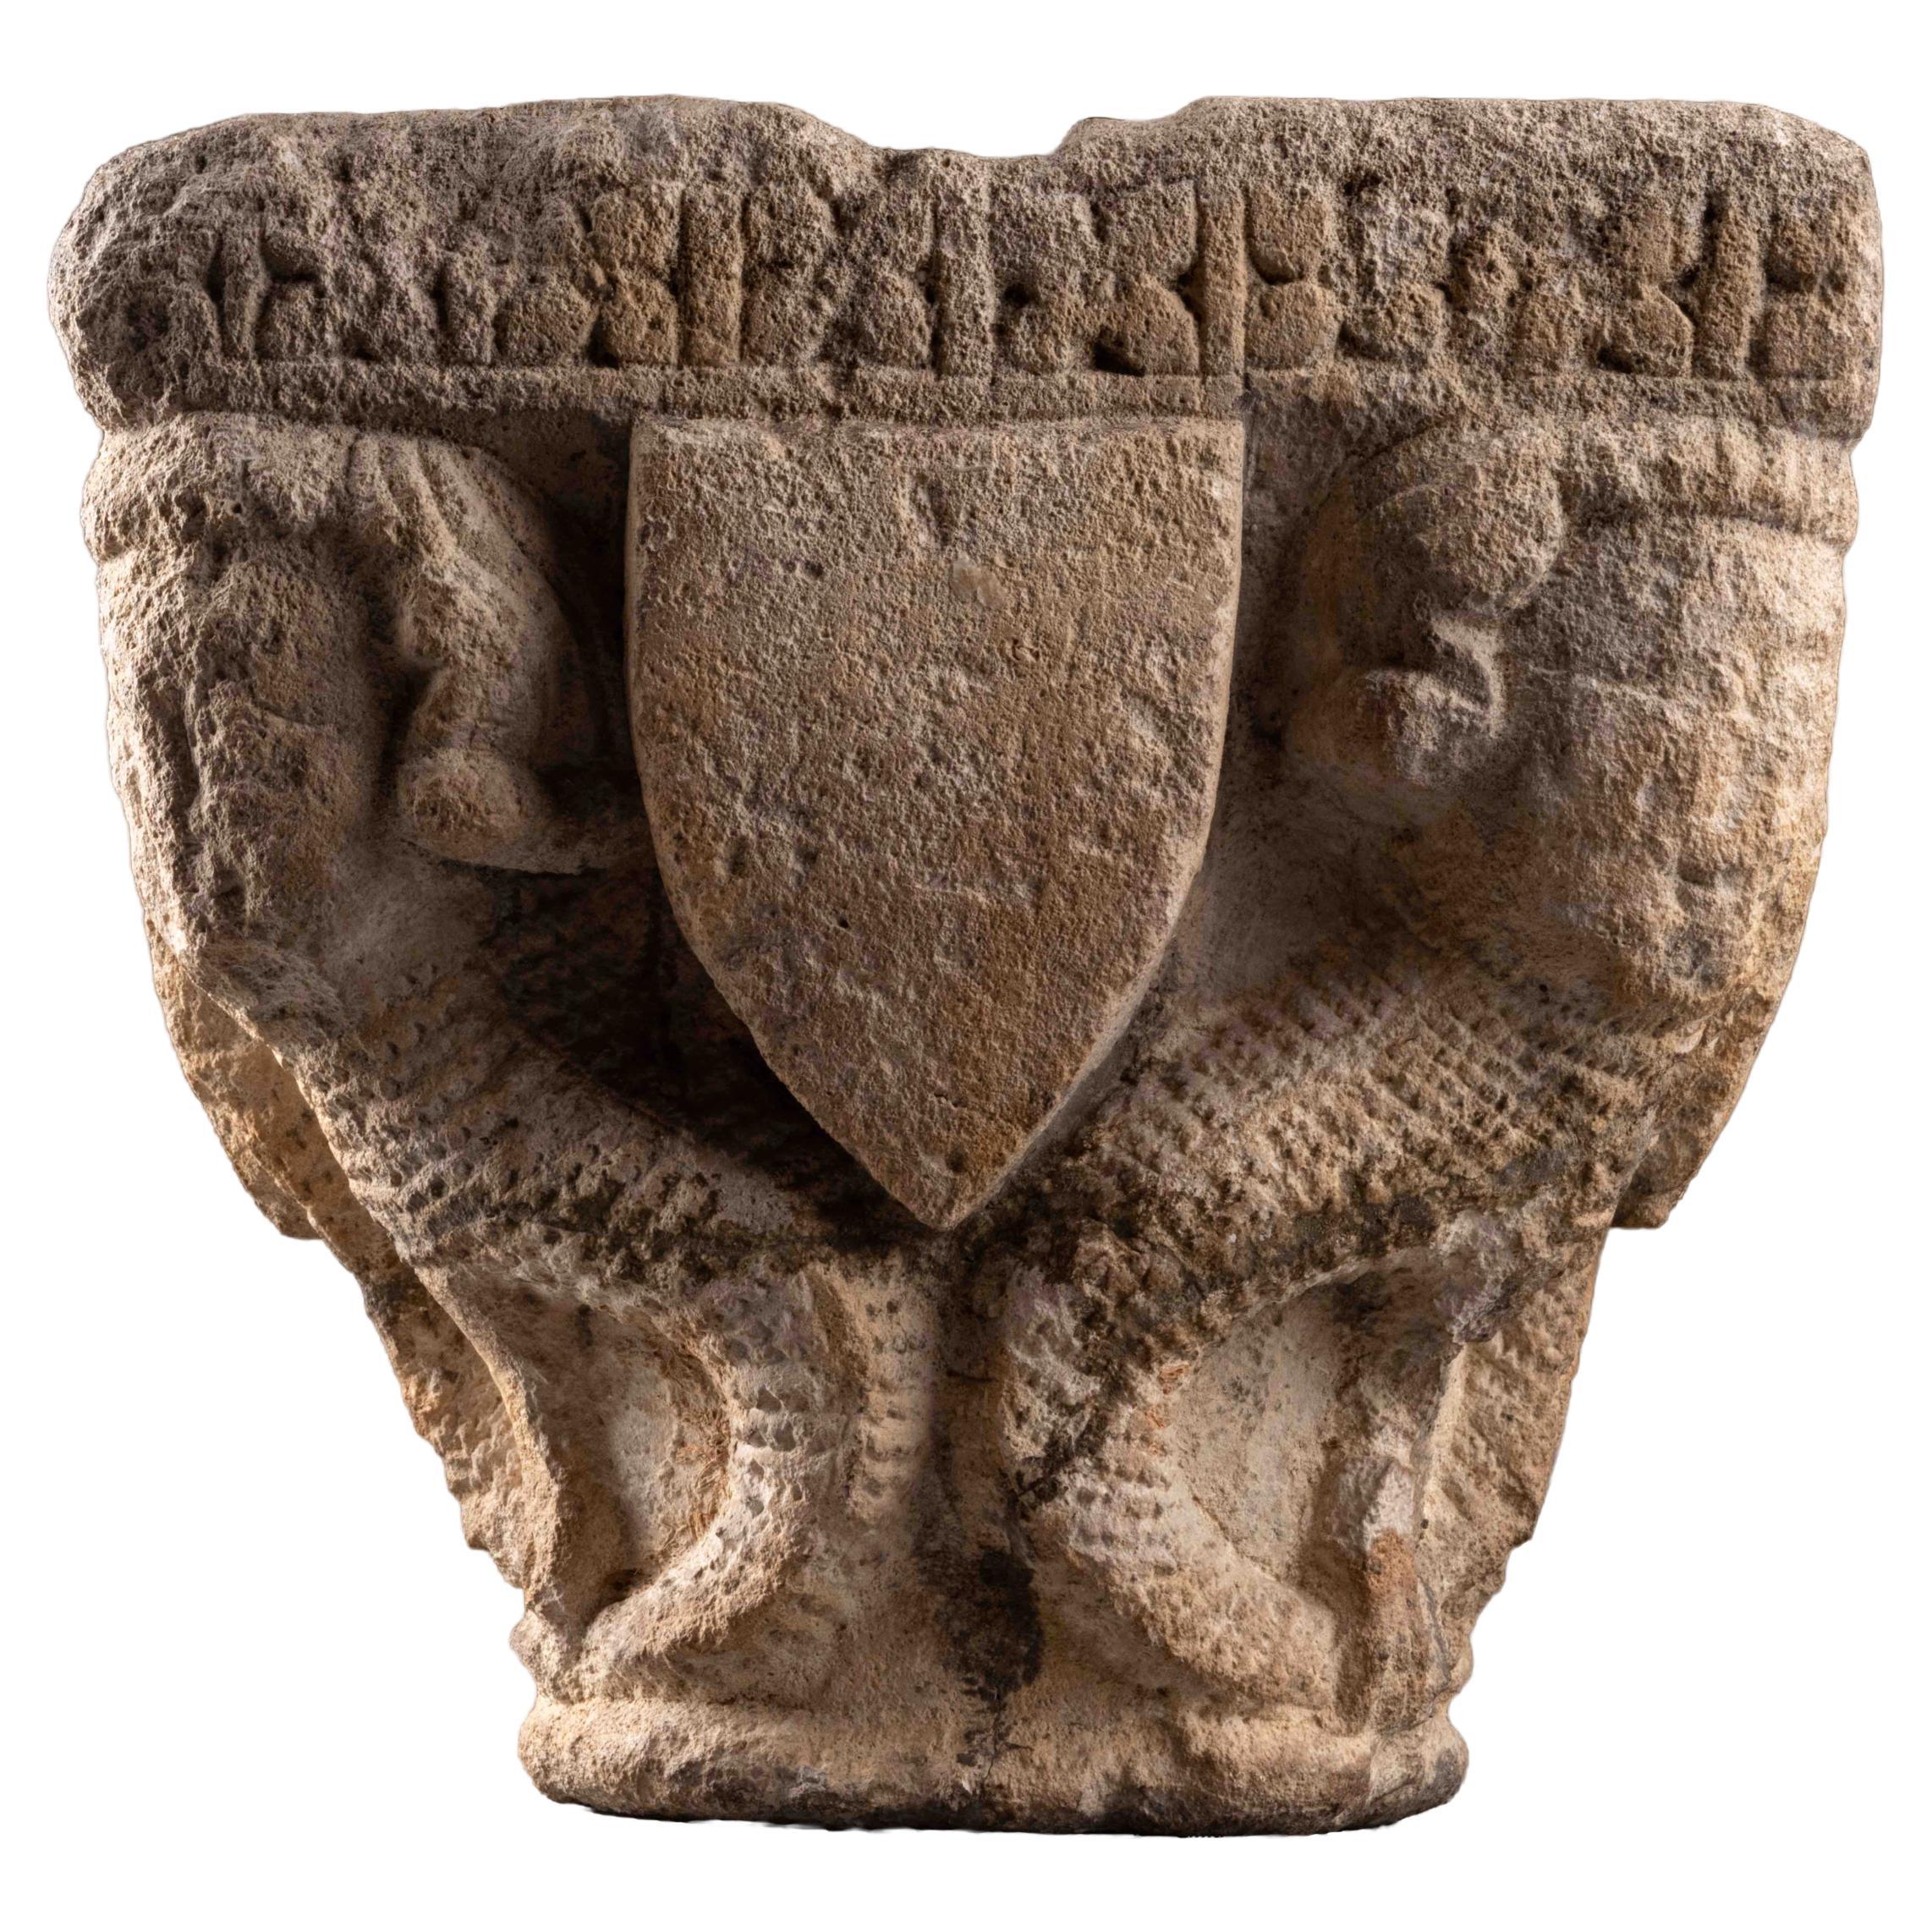 Chapiteau romain avec sirènes - France 13e siècle en vente